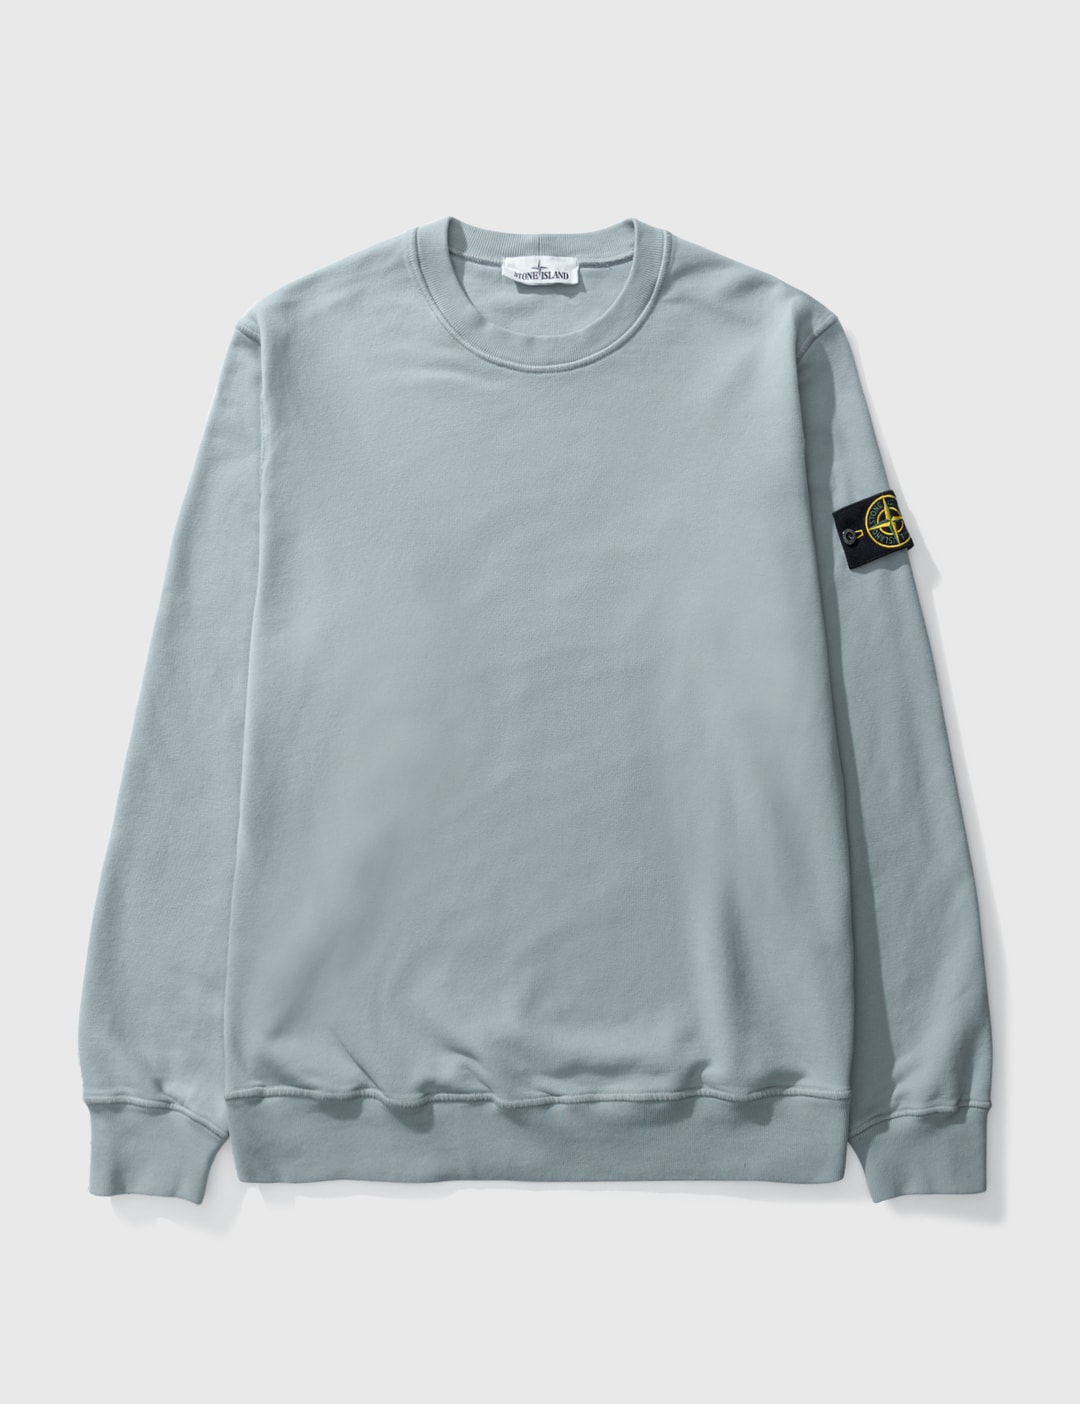 Stone Island - Classic Sweatshirt | HBX - Globally Curated Fashion and ...